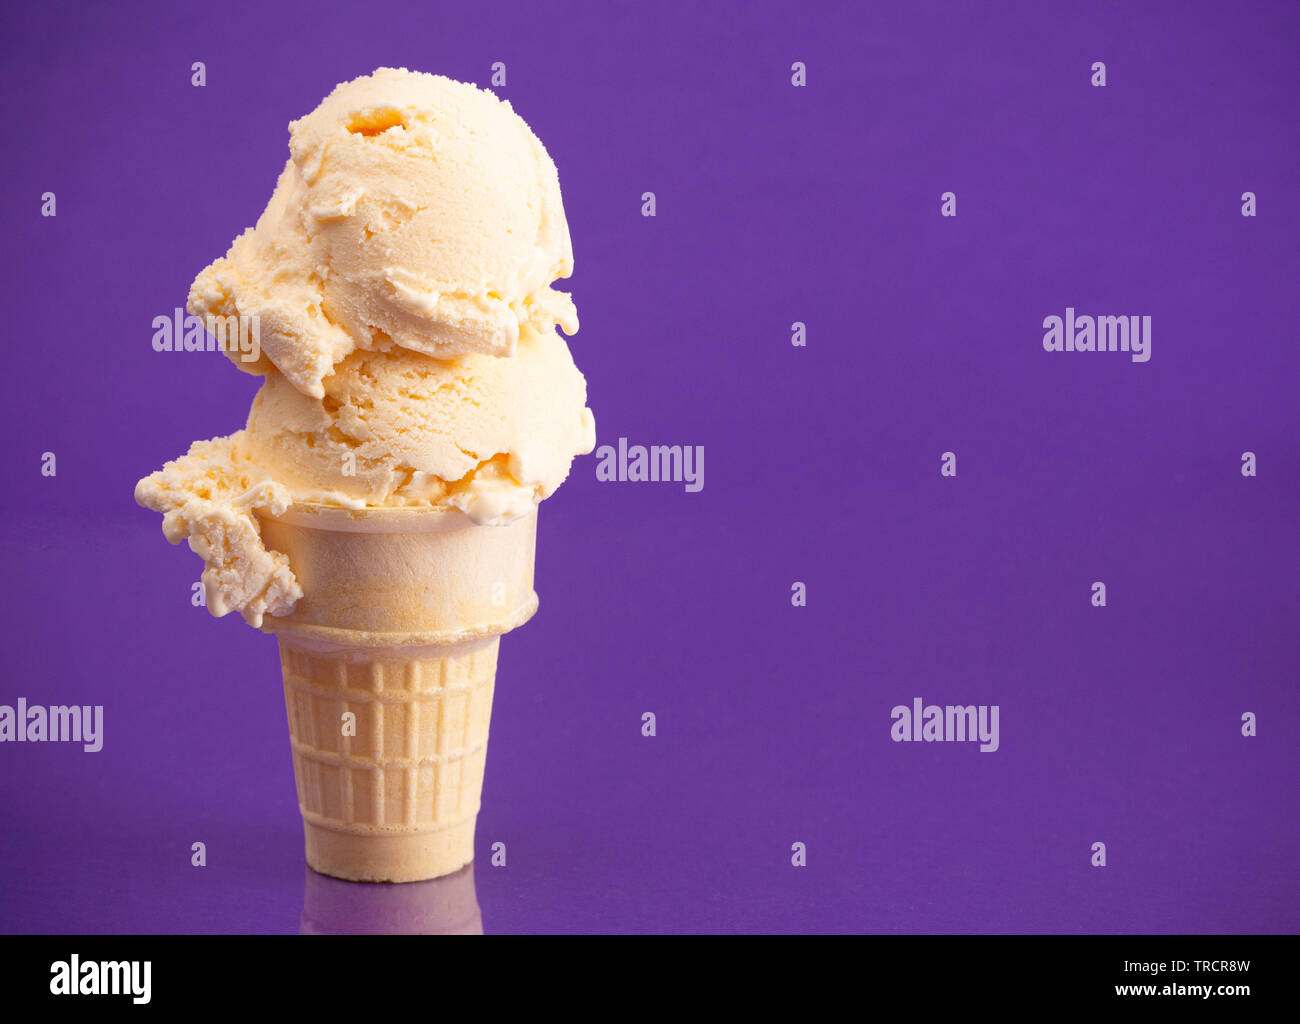 110+ Double Scoop Ice Cream Cone Stock Photos, Pictures & Royalty